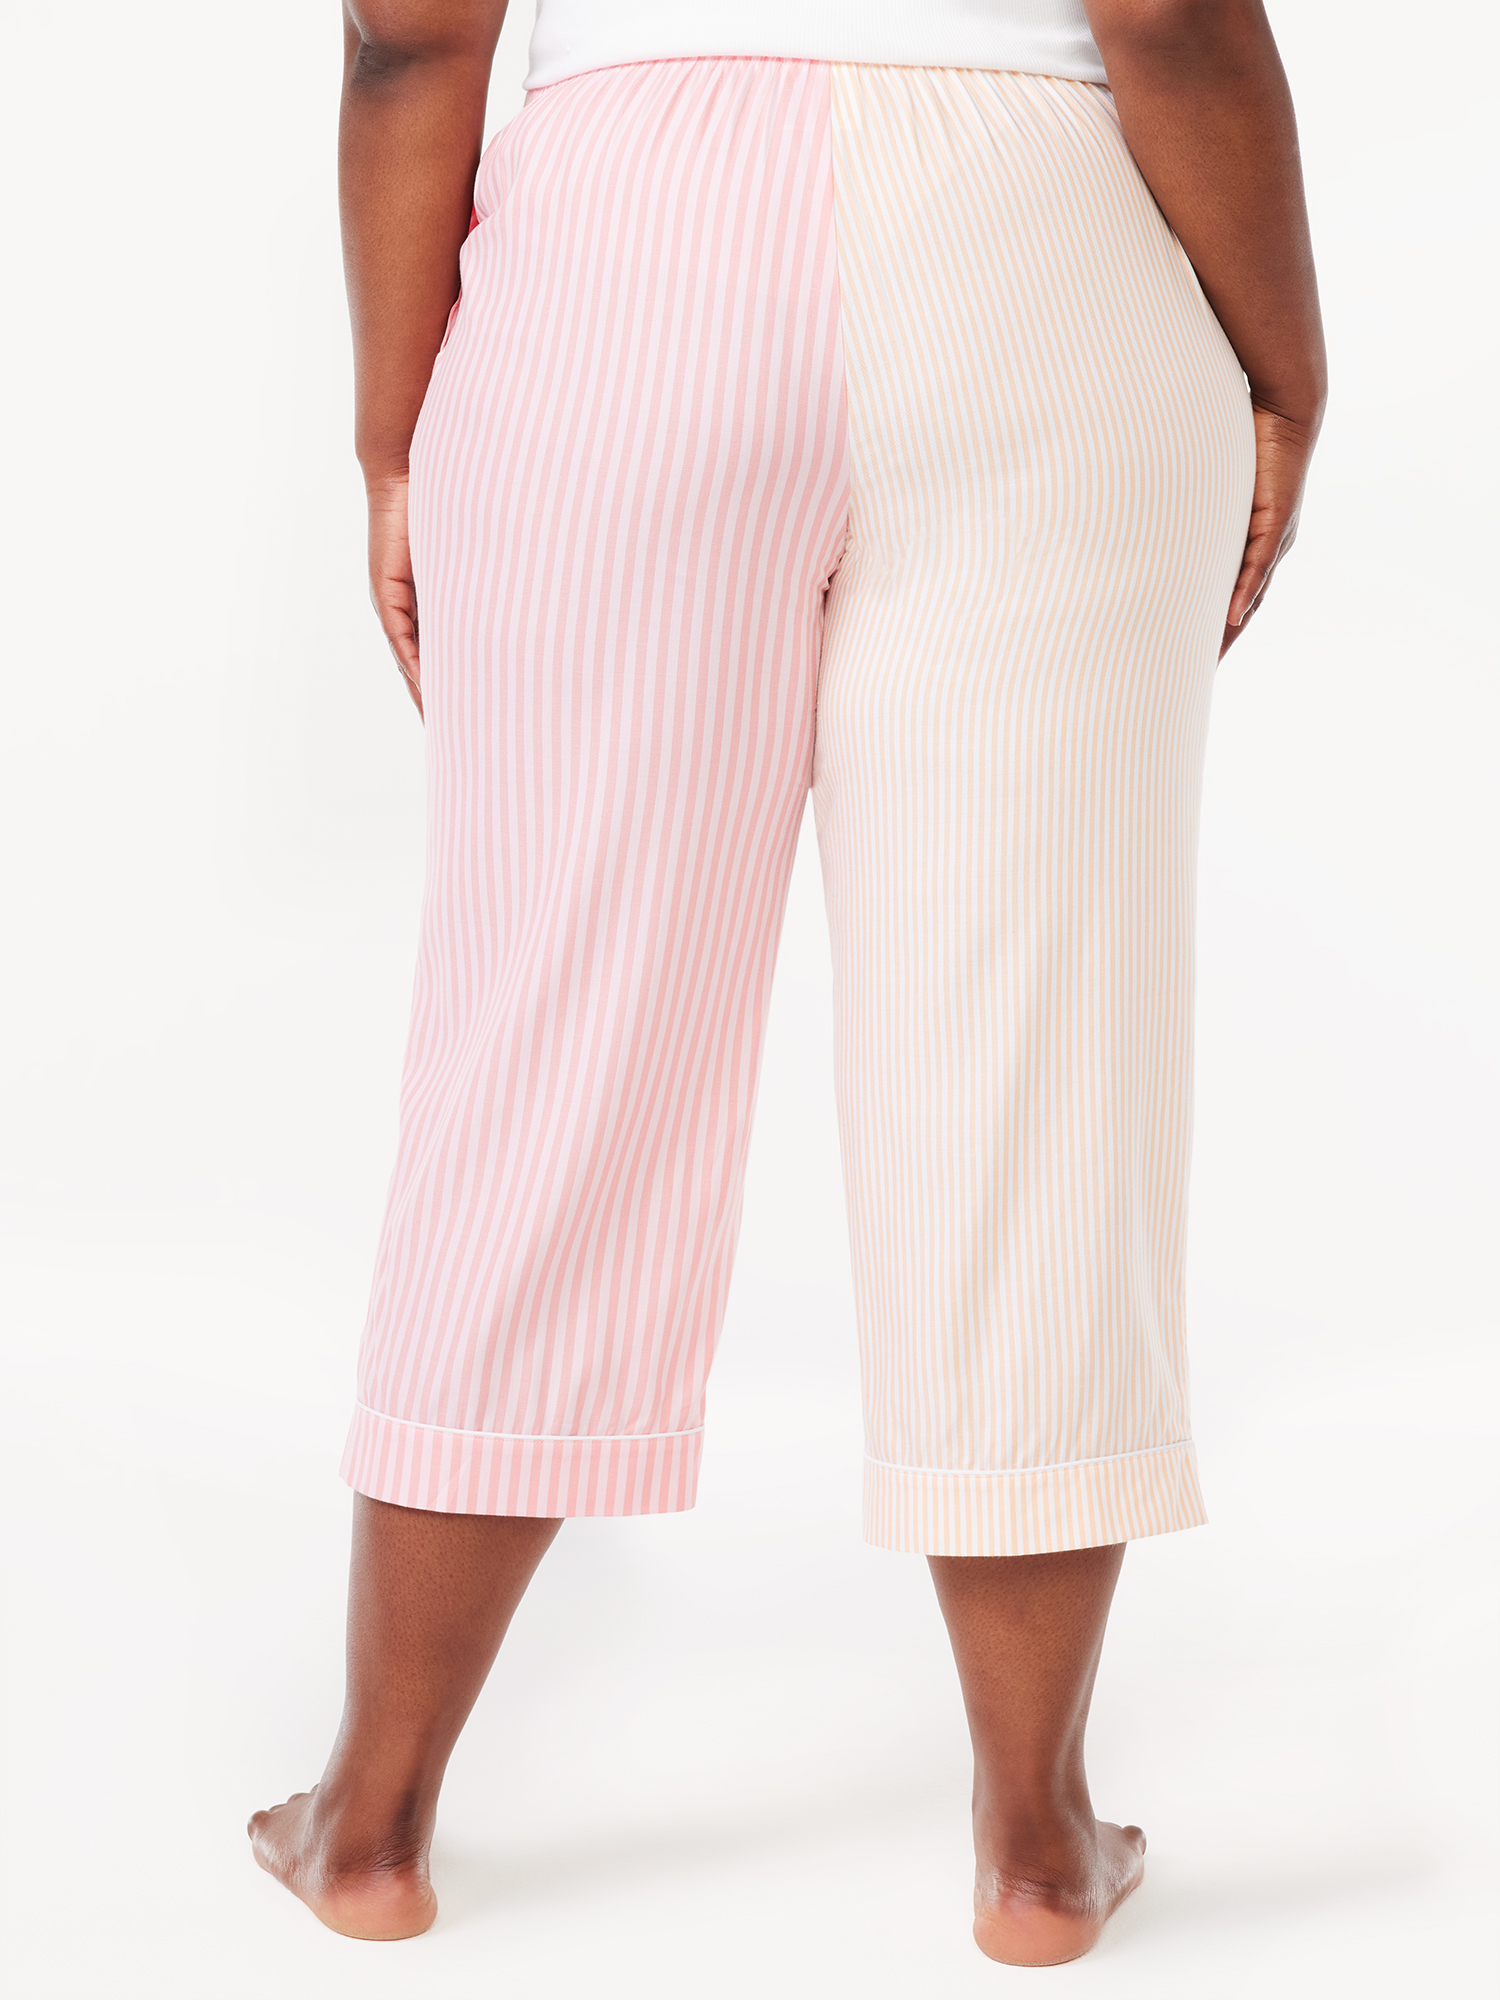 Joyspun Women's Woven Cropped Pajama Pants, Sizes S to 3X - image 3 of 5